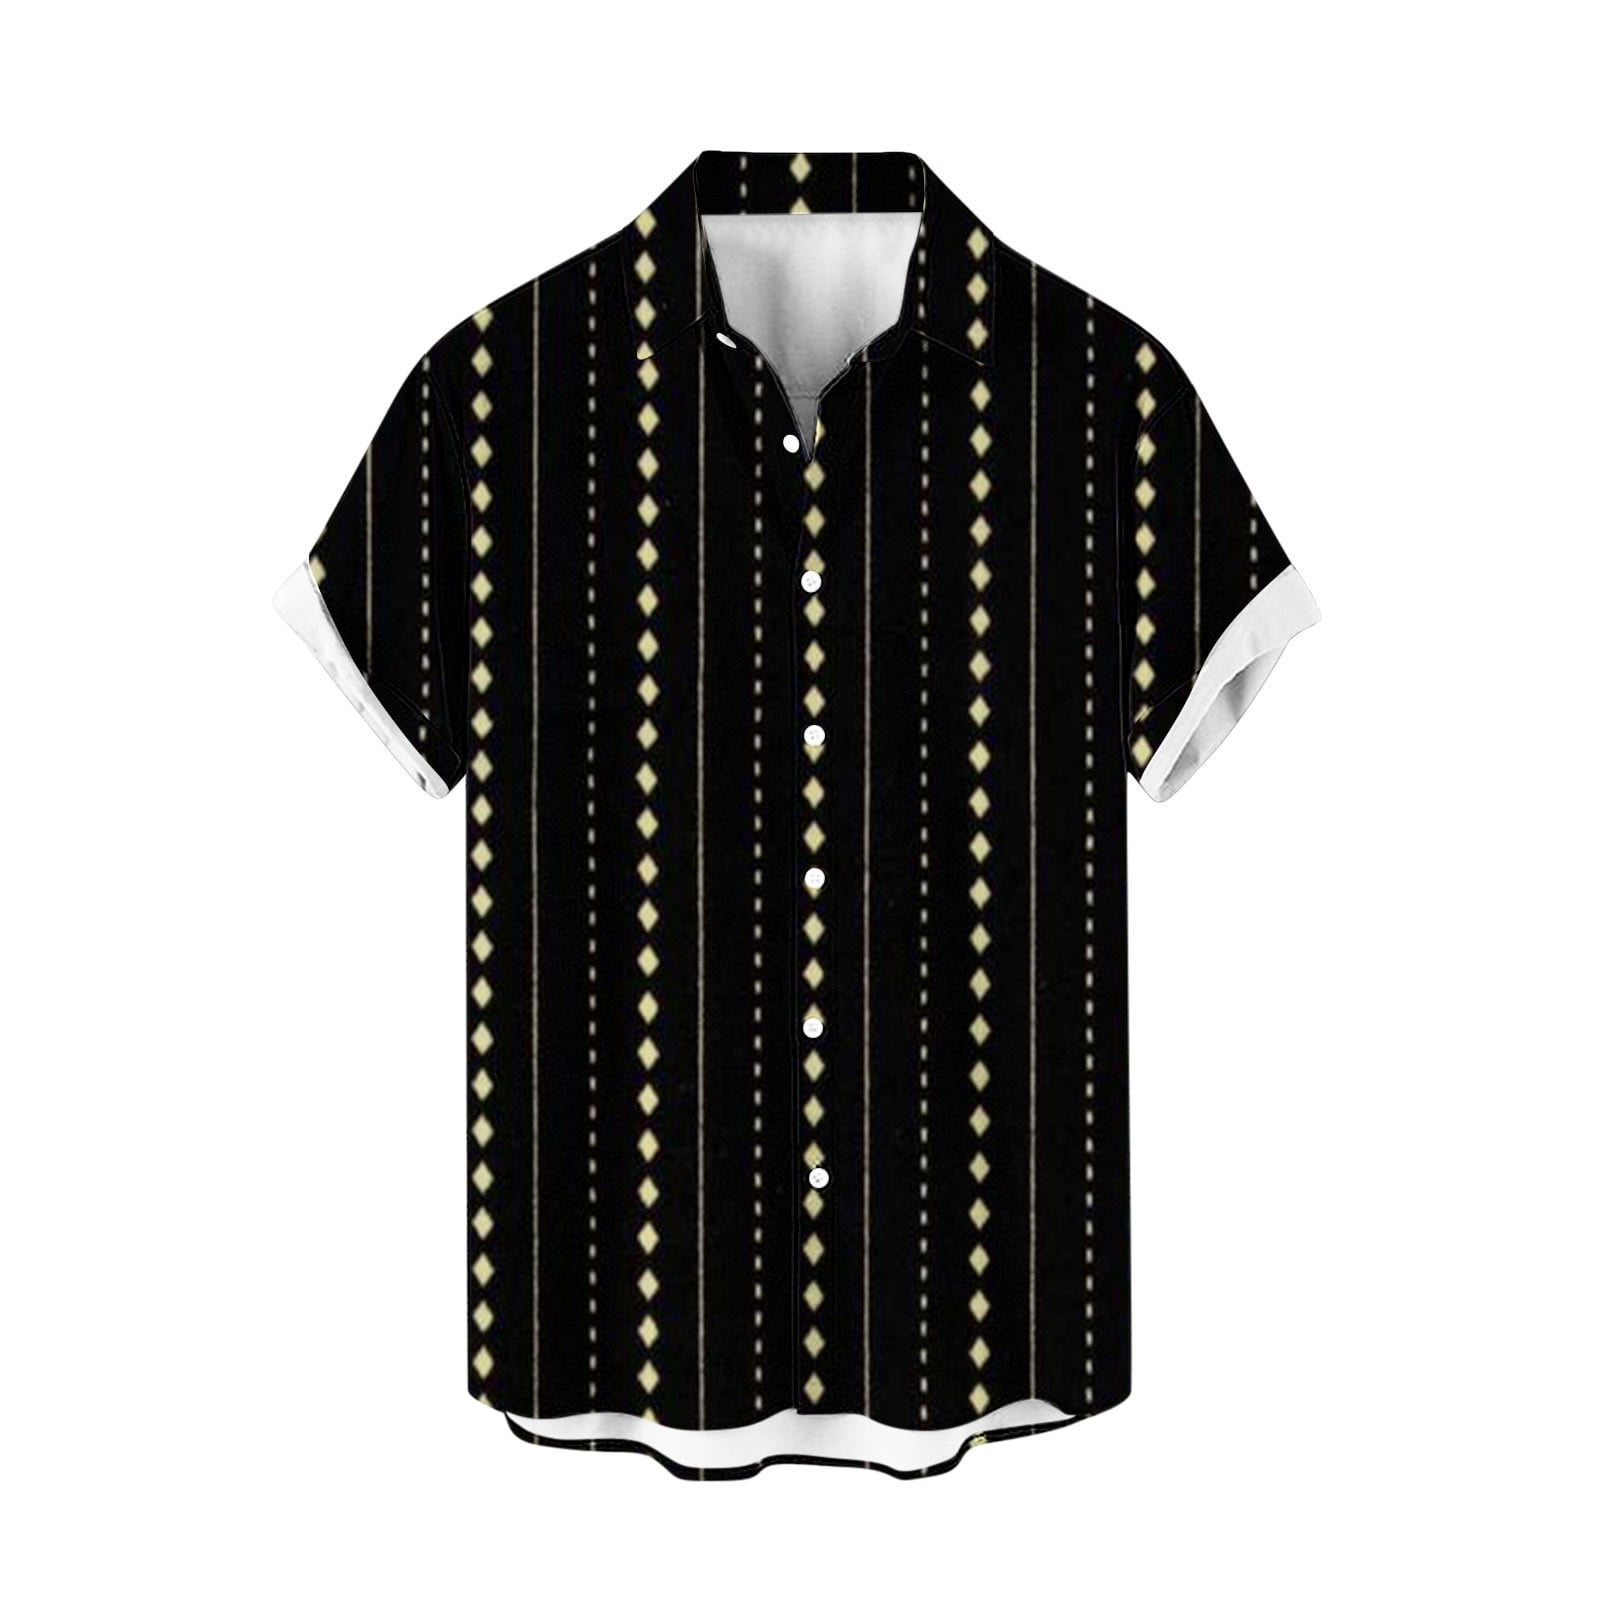 RYRJJ Hawaiian Bowling Shirt for Men Vintage Short Sleeves Button Down ...